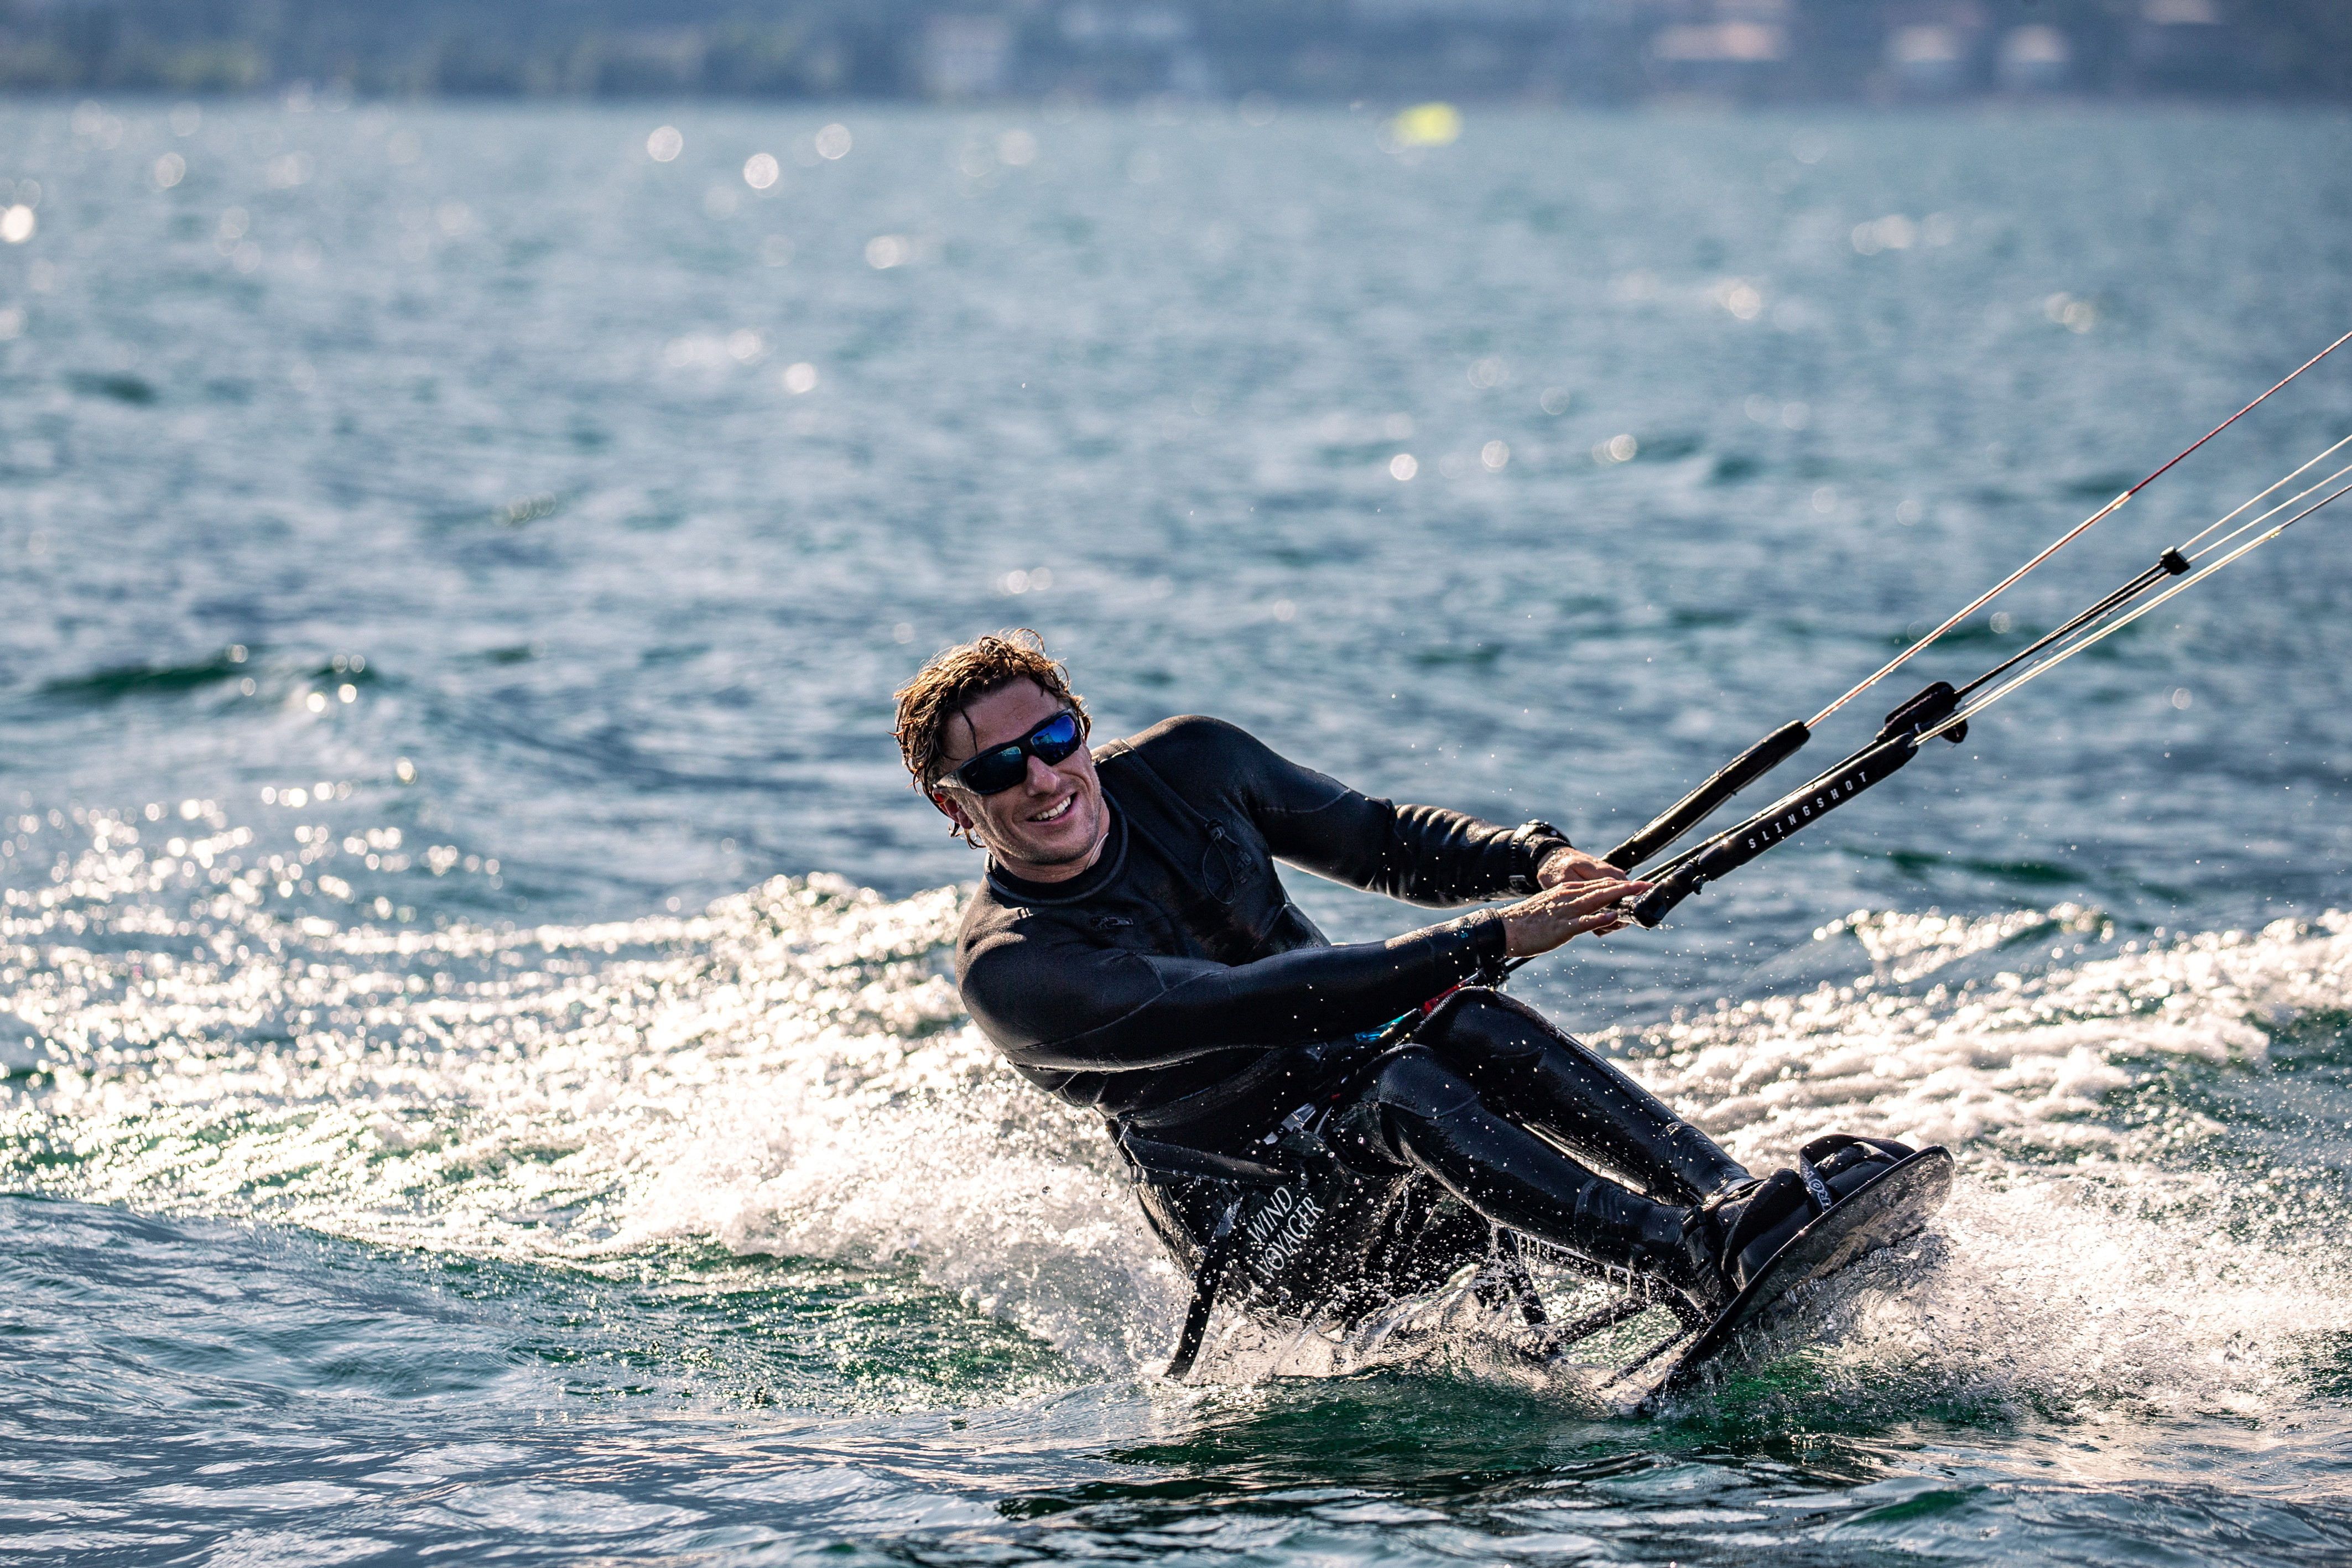 Willem Hooft attends World Sailing's first Para Kiteboarding Development Programme, on Lake Garda